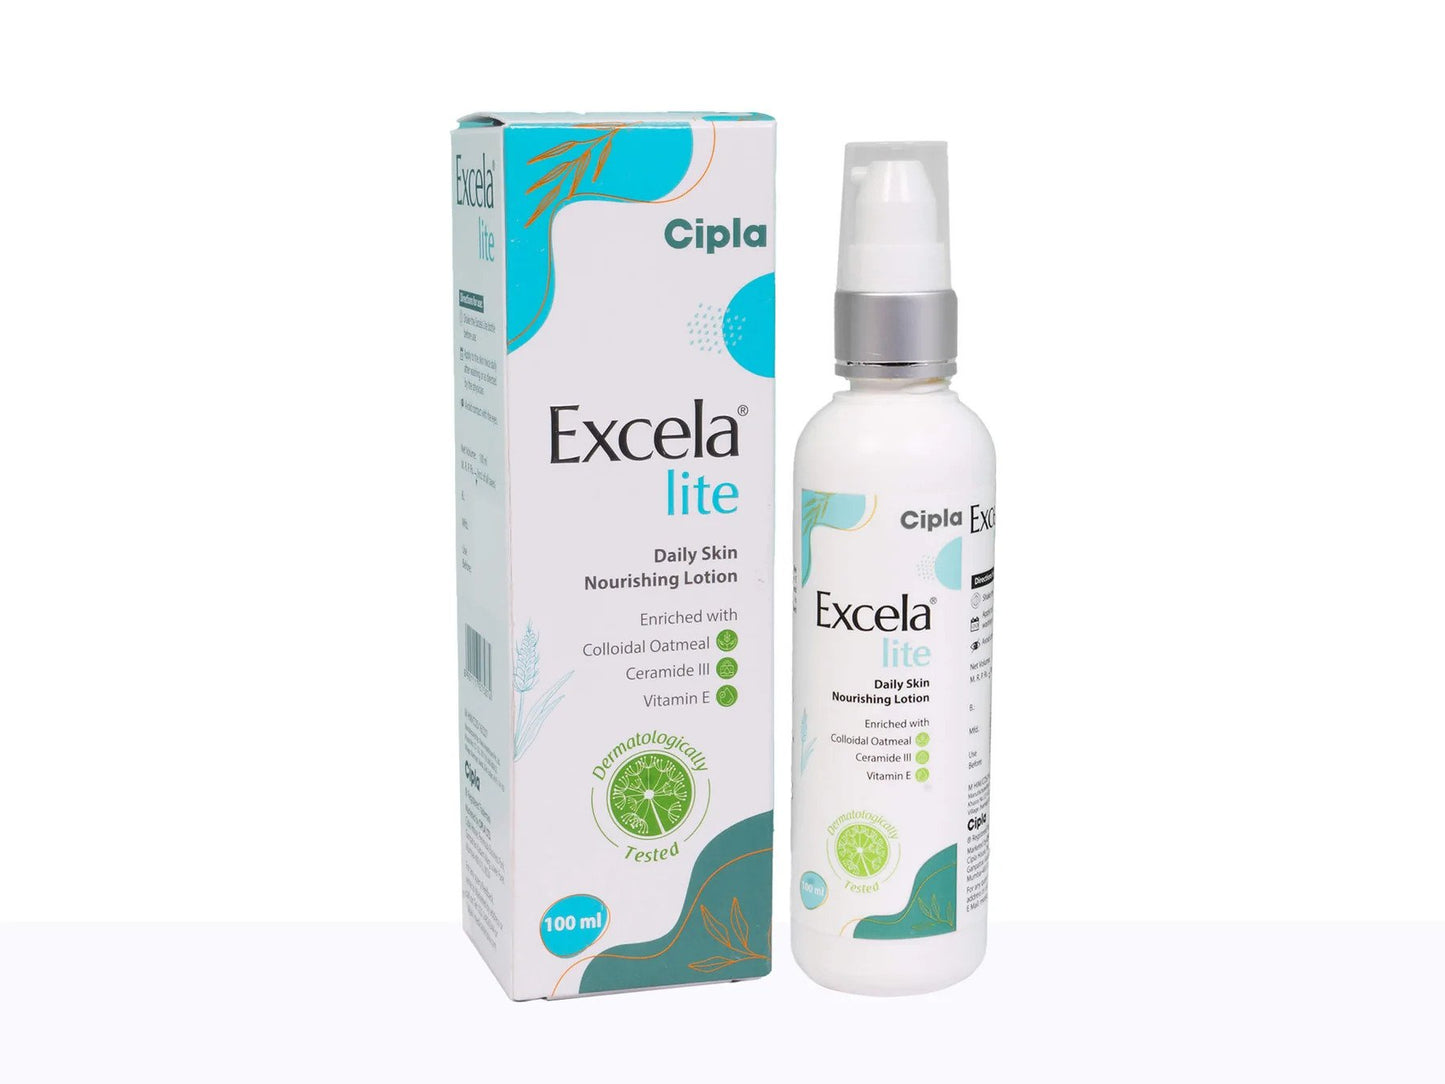 Excela Lite Daily Skin Nourishing Lotion, 100ml